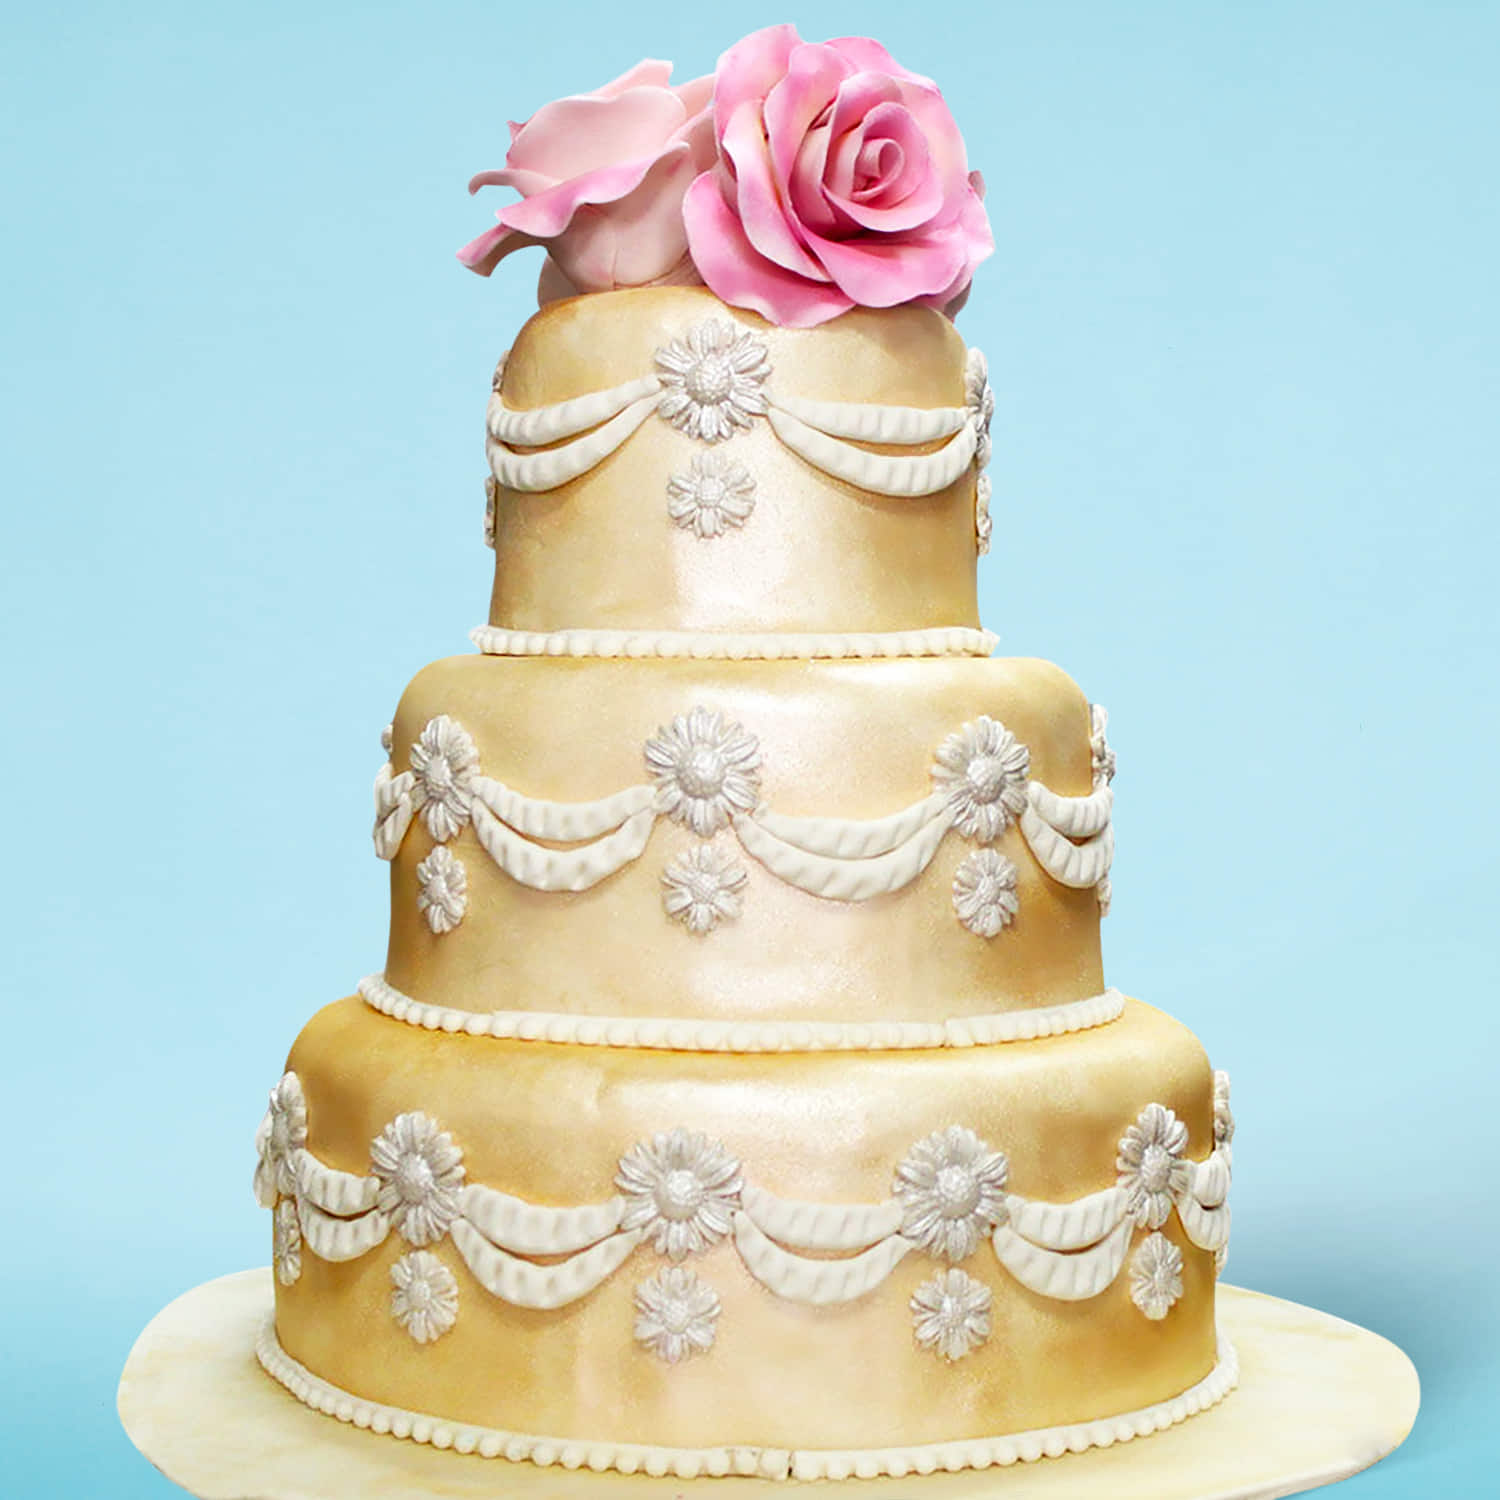 20+ Elegant White And Gold Cake Designs - The Wonder Cottage | White birthday  cakes, Golden birthday cakes, Elegant birthday cakes